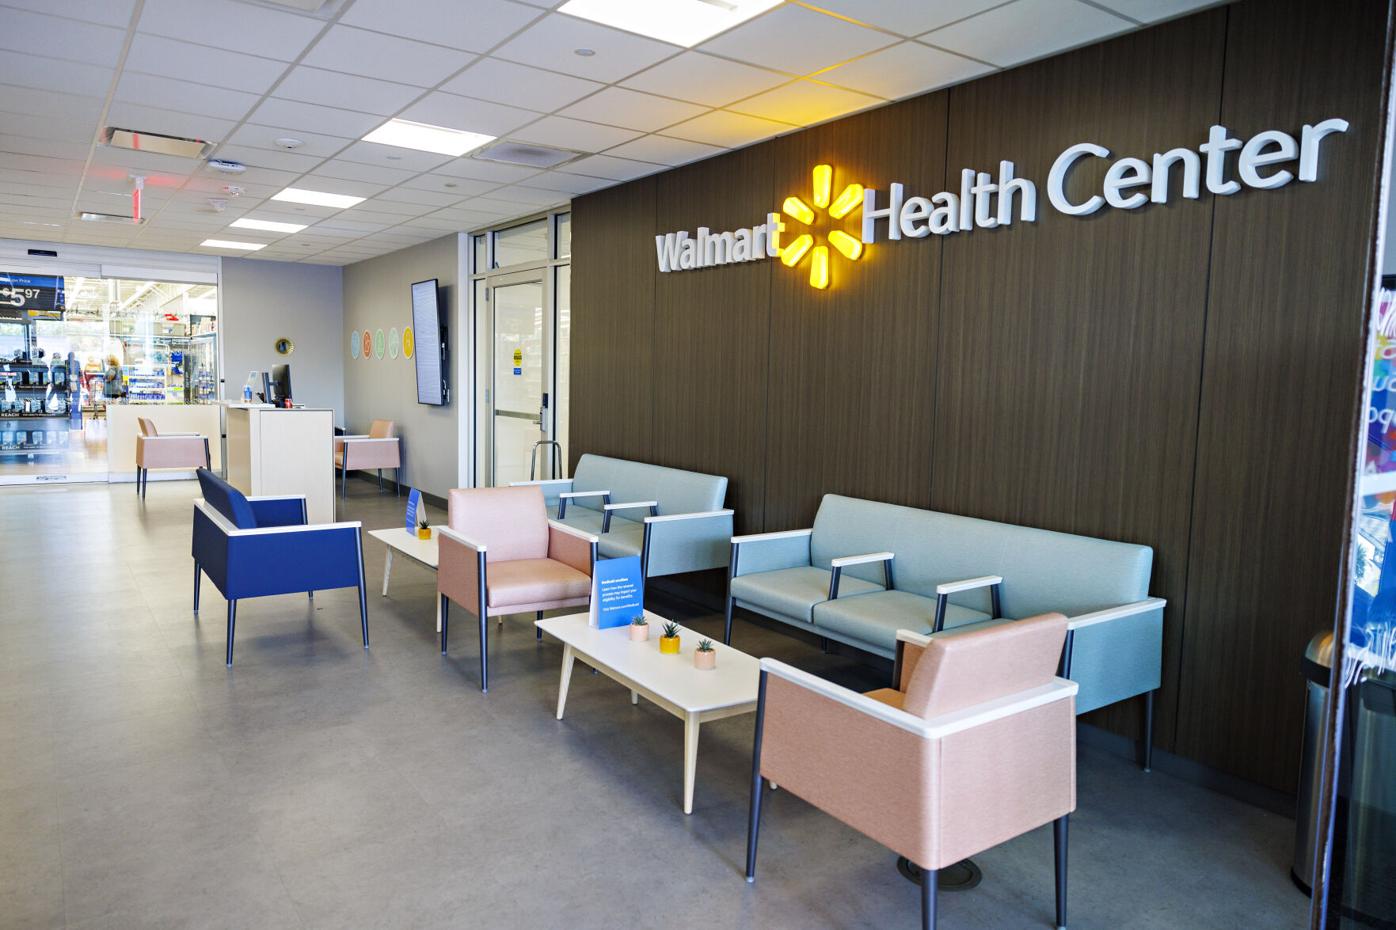 Walmart begins Health Center rollout in Florida